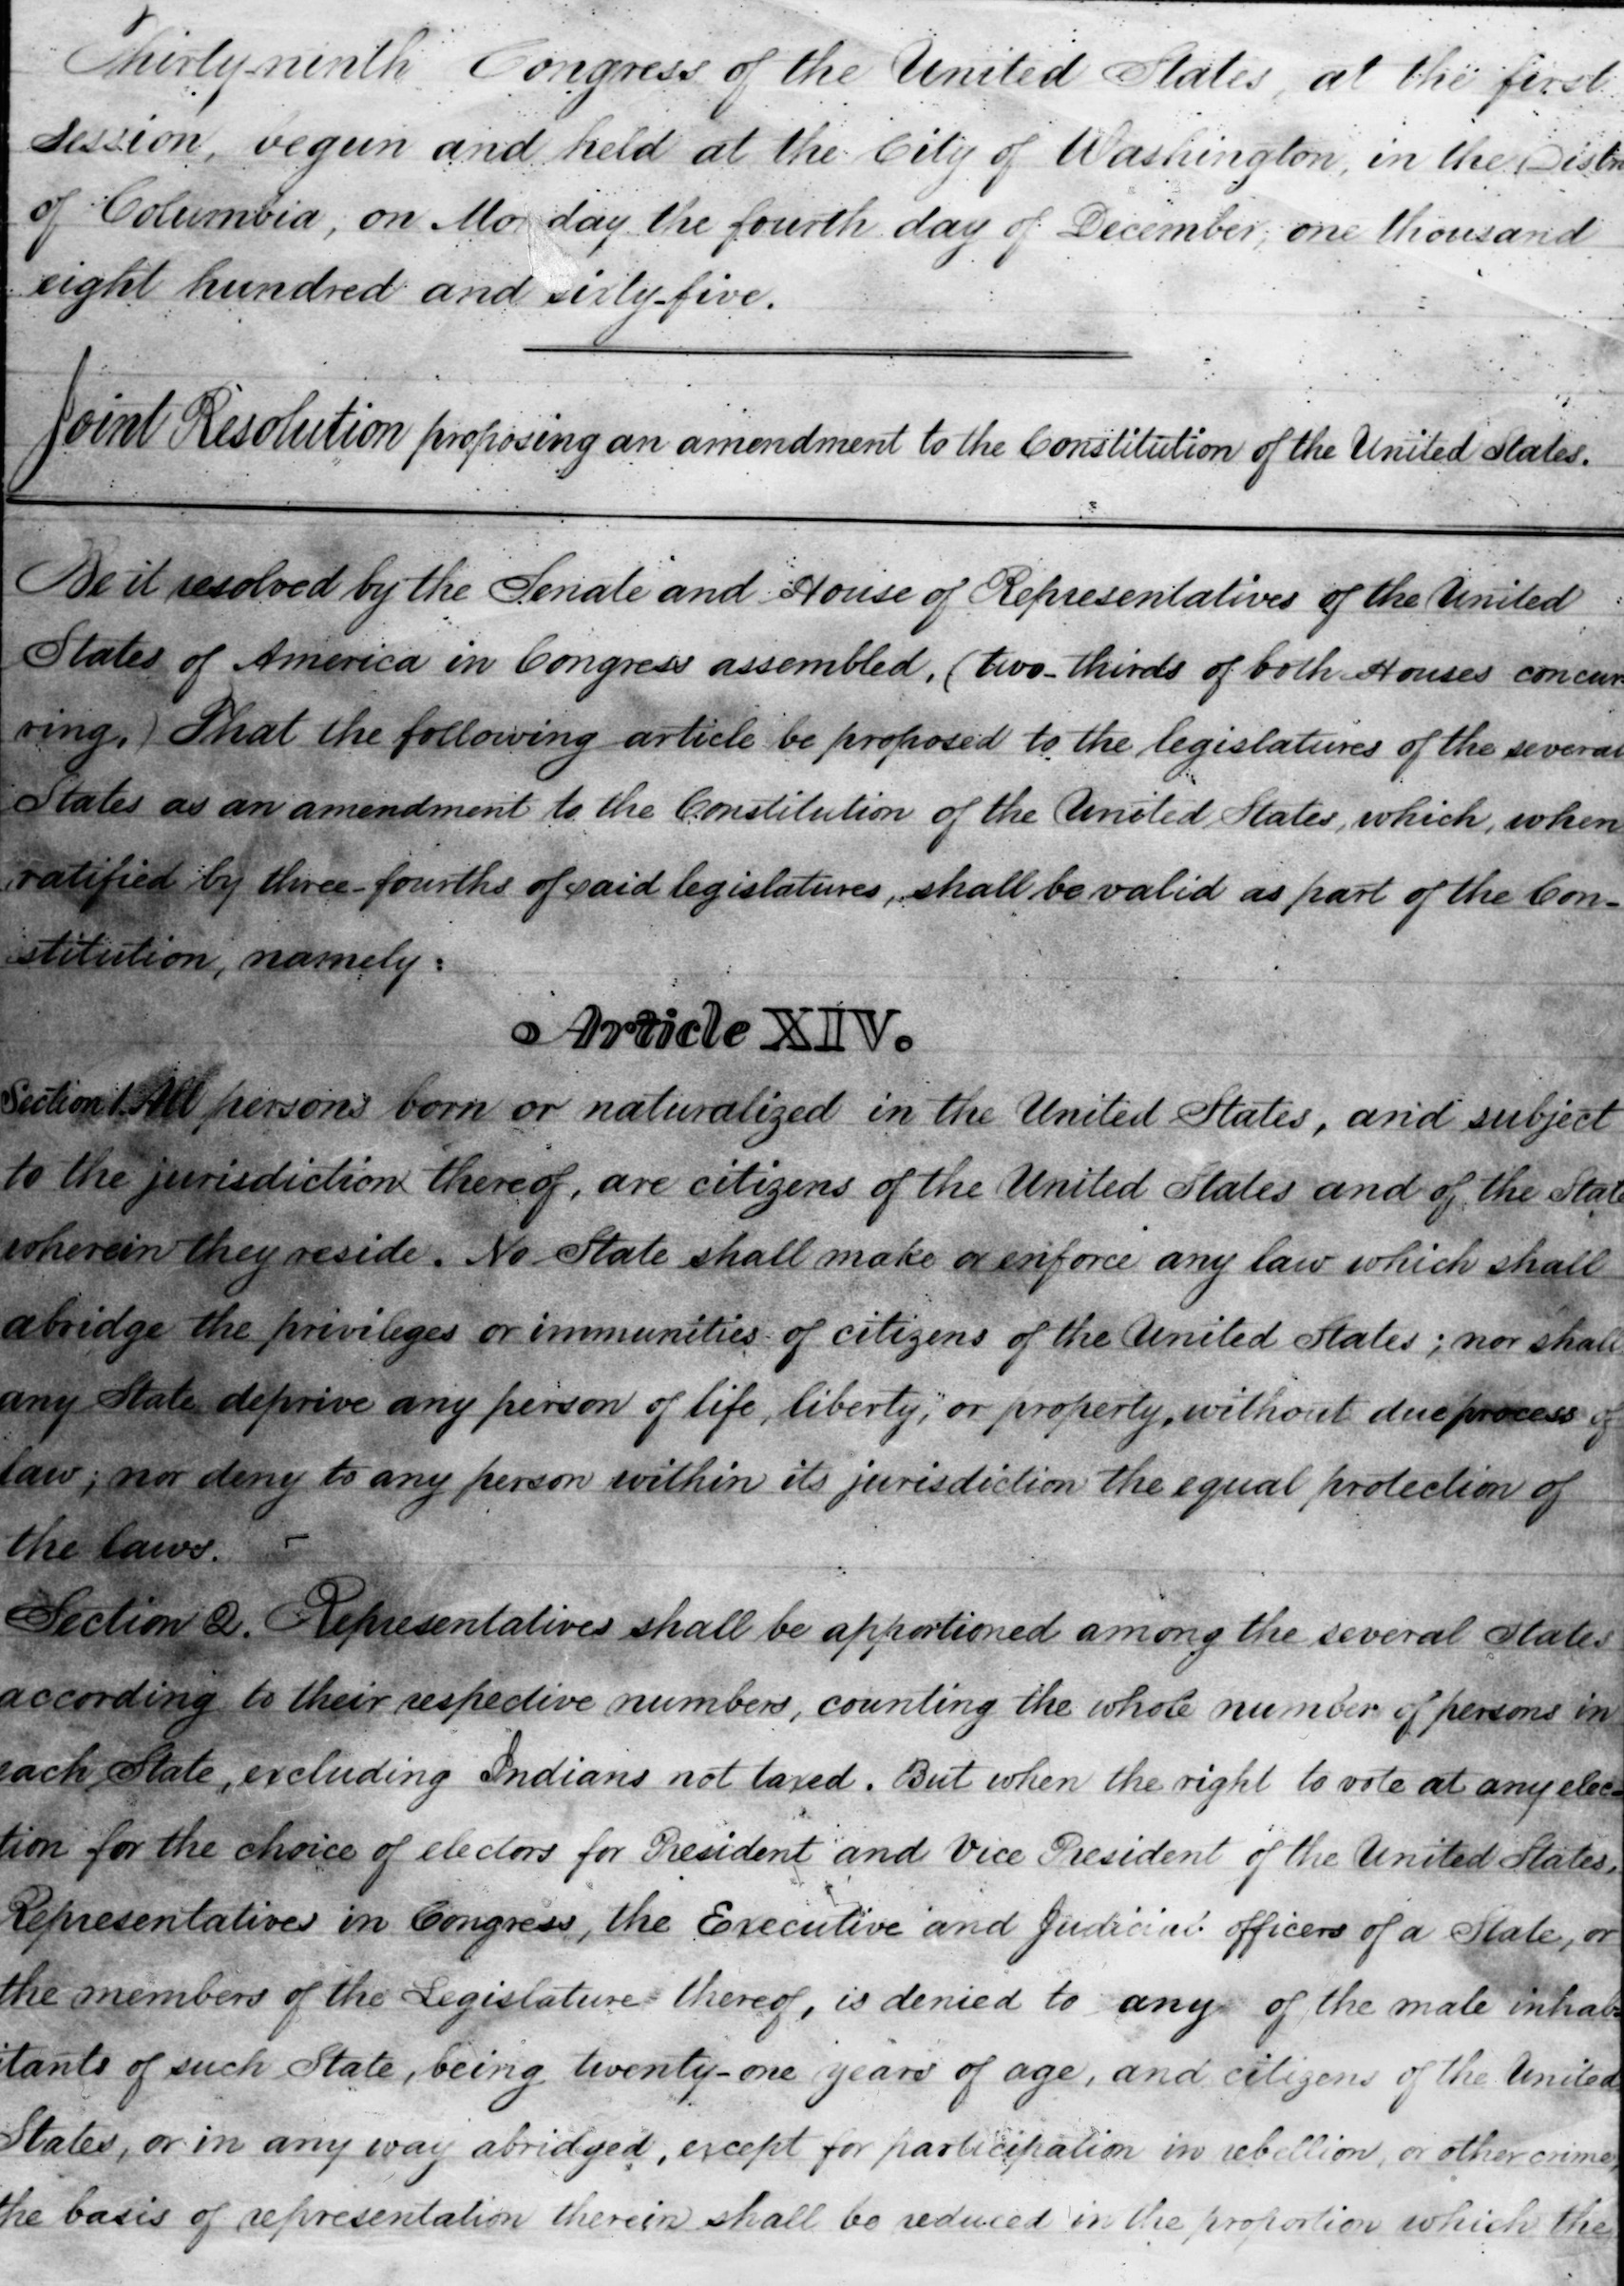 14th Amendment To US Constitution